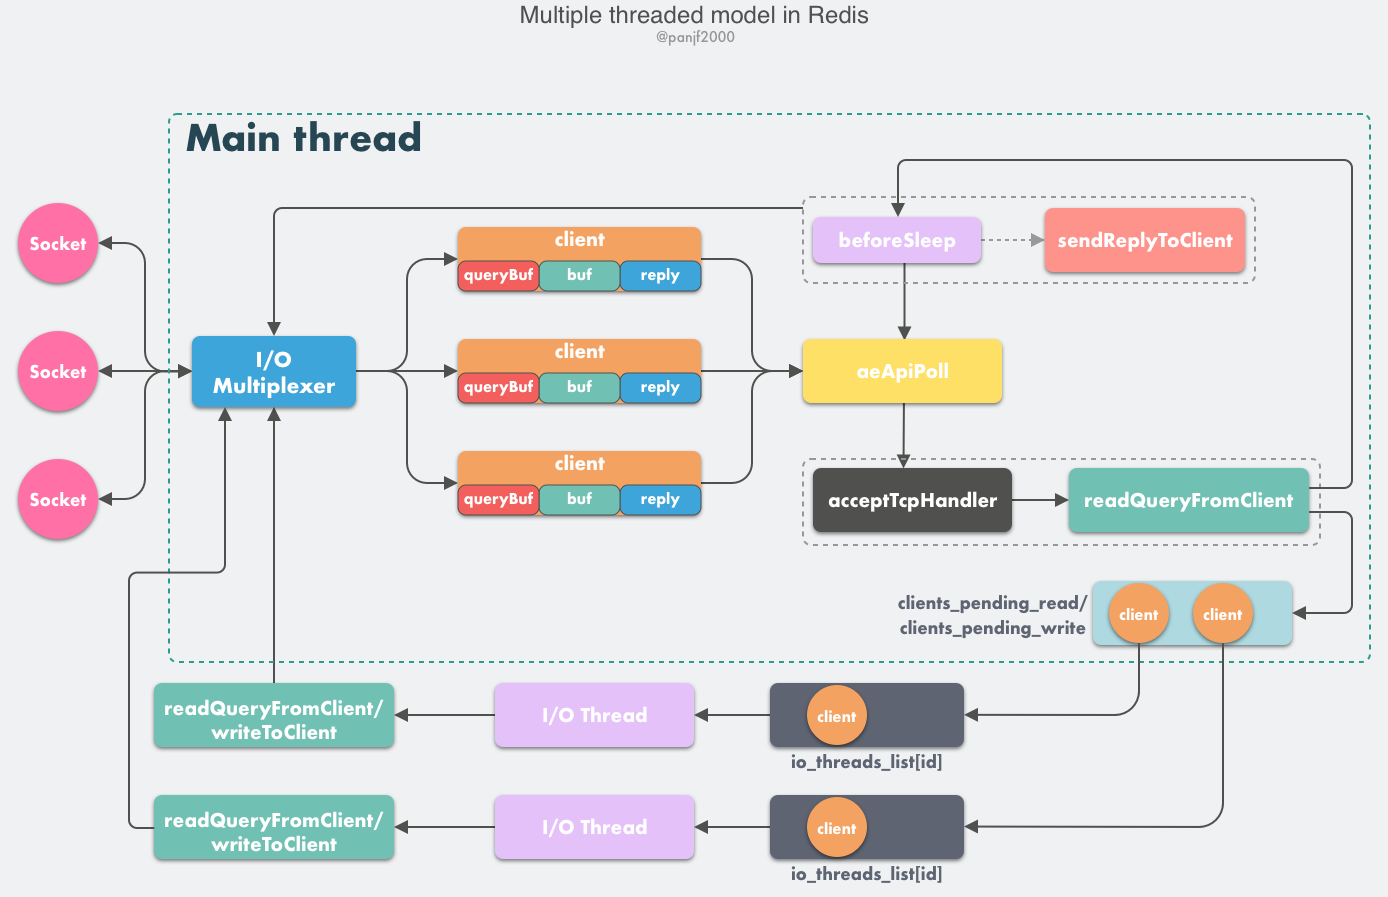 multithreaded model in redis